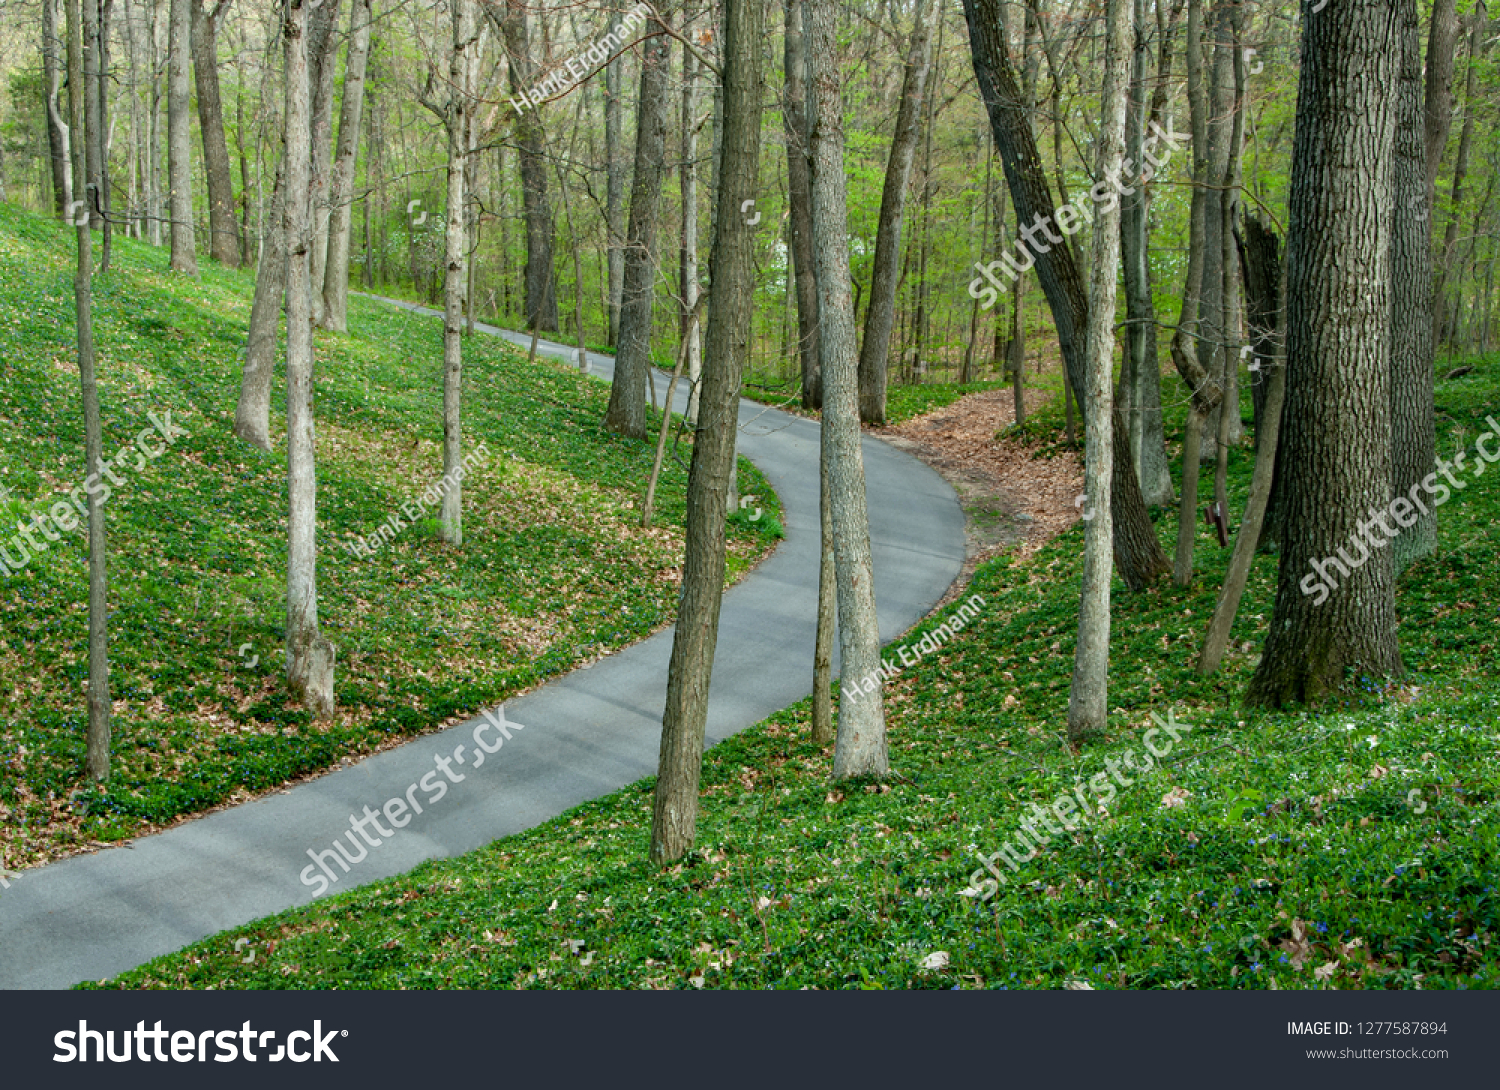 Road Runs Through Lush Spring Forest Stock Photo Edit Now 1277587894